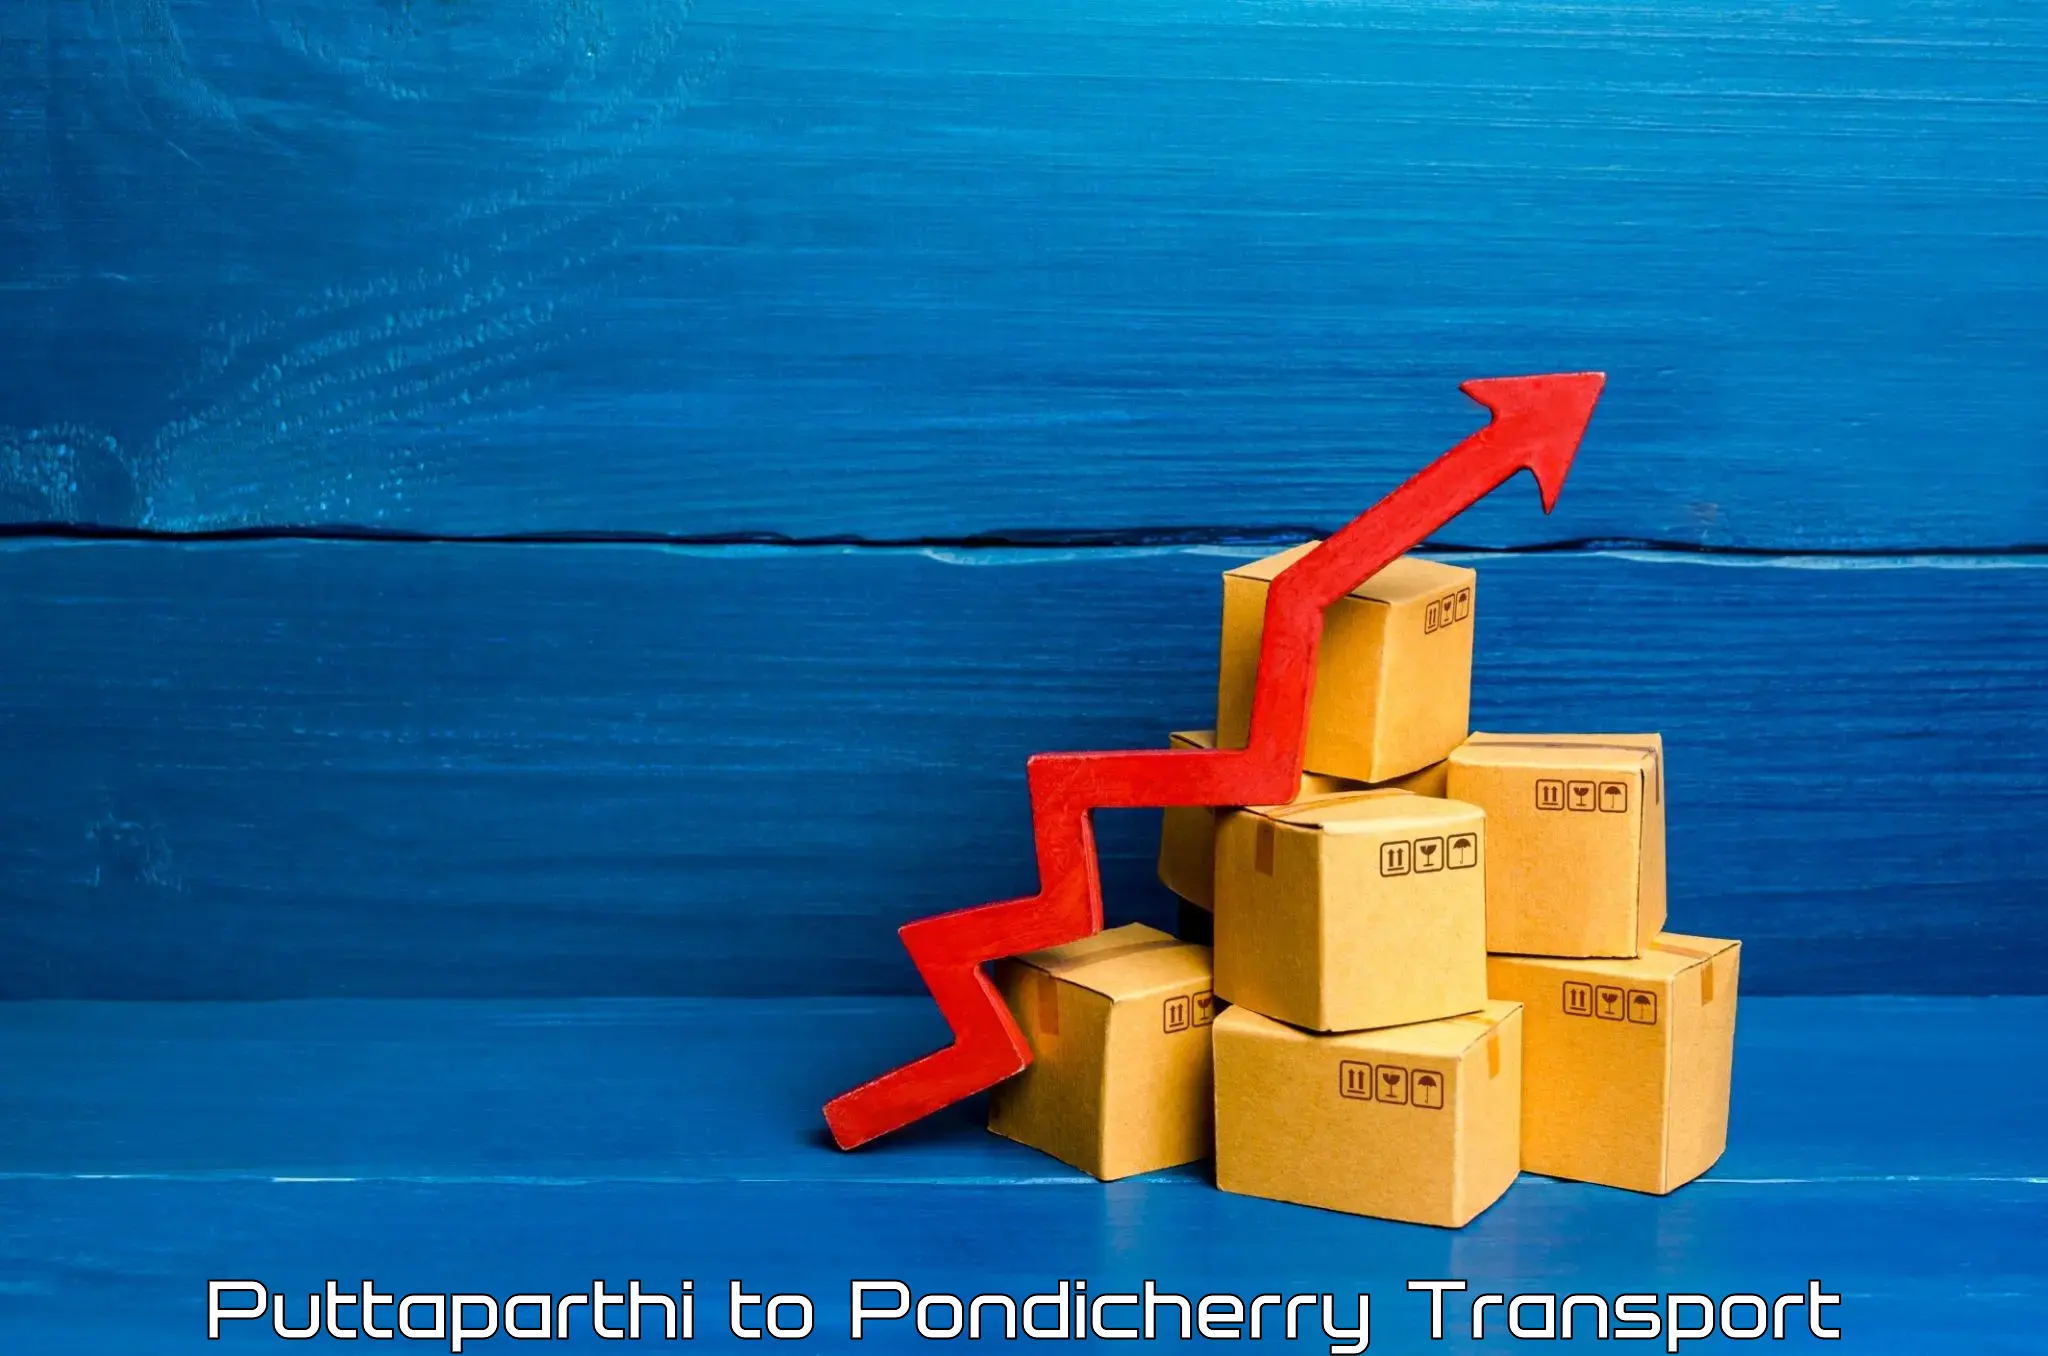 Transport in sharing Puttaparthi to Pondicherry